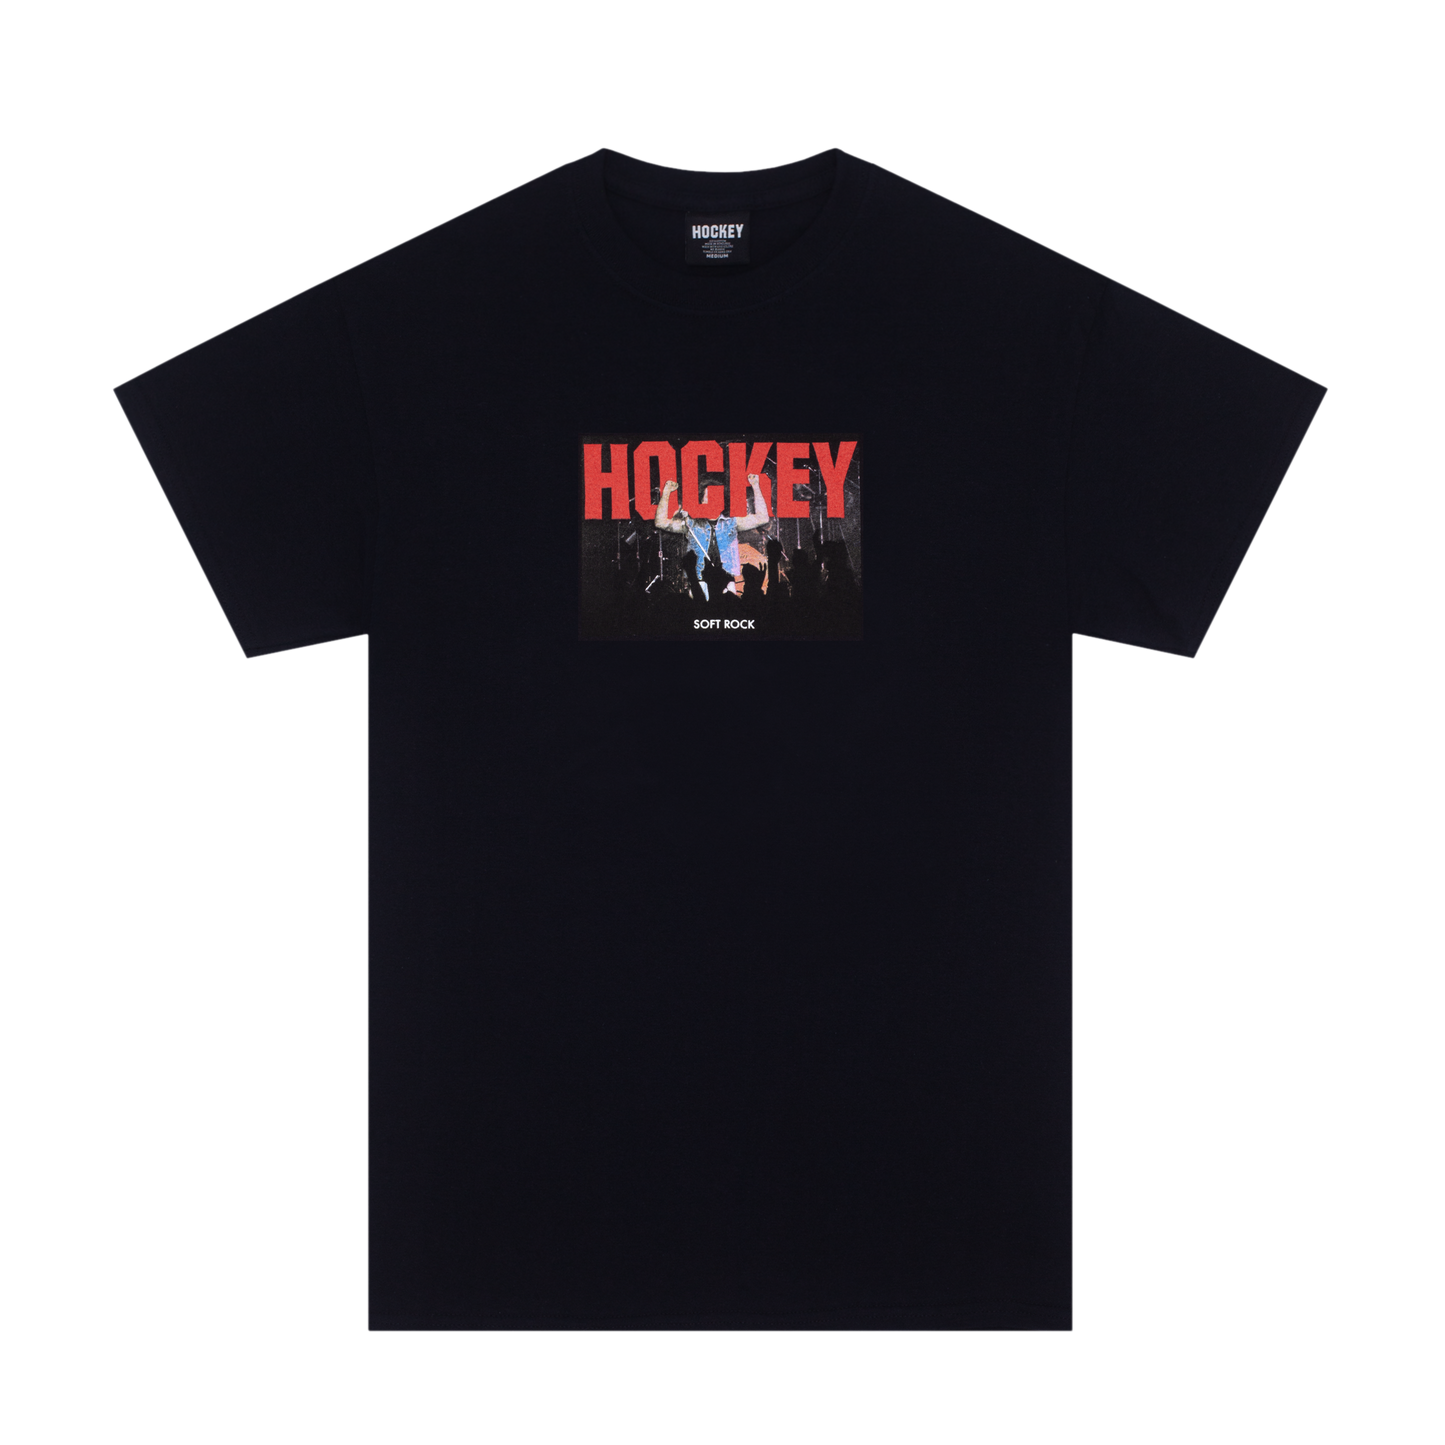 Hockey Soft Rock Tee - Black